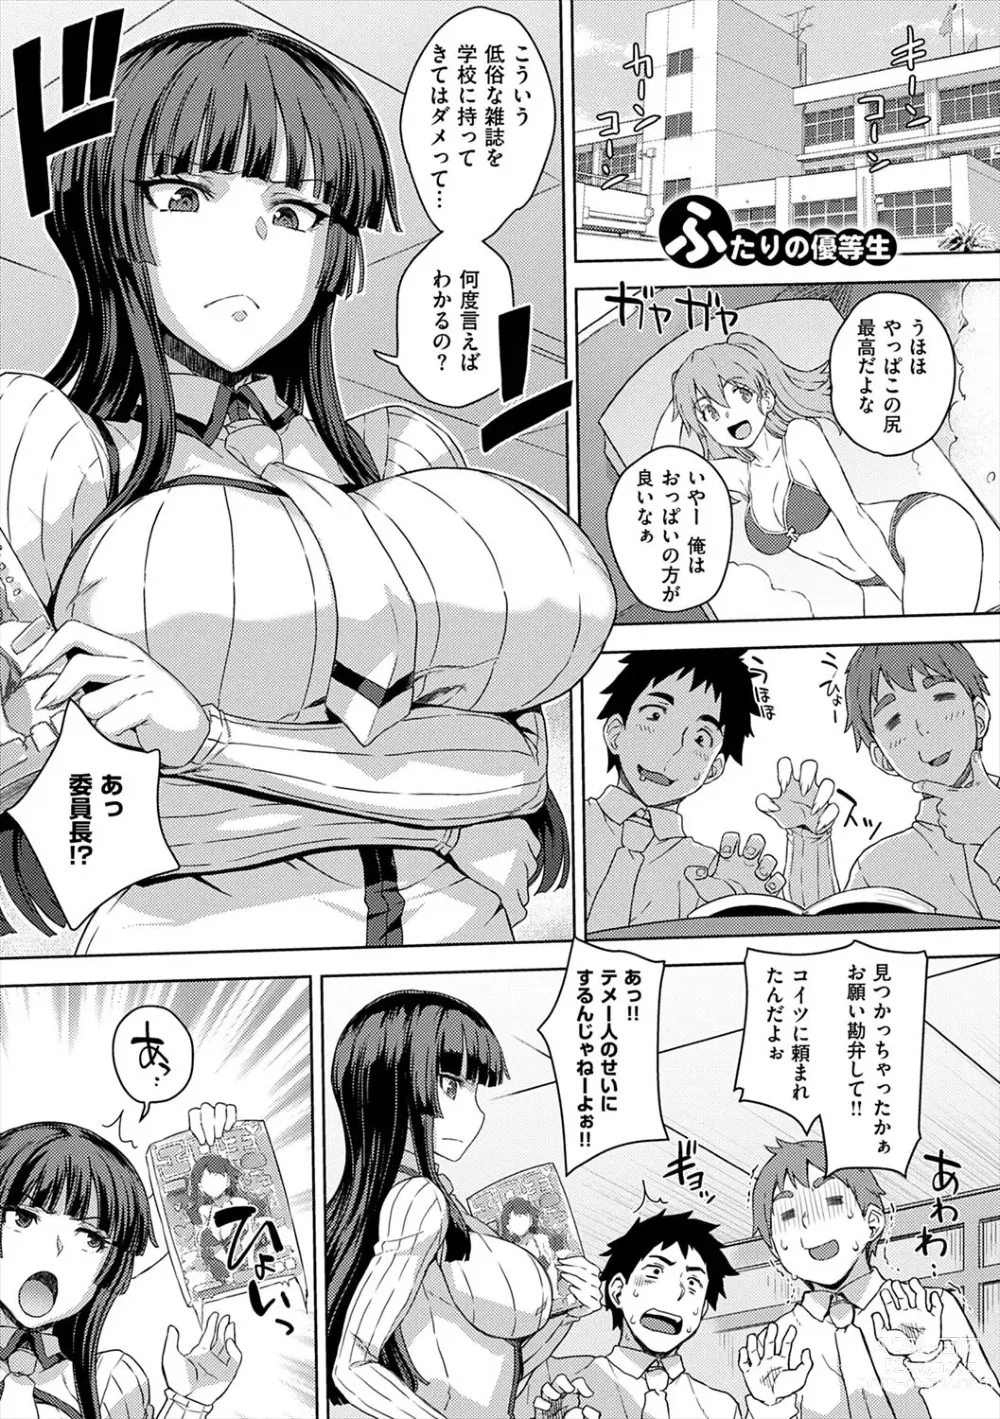 Page 7 of manga Marble Girls